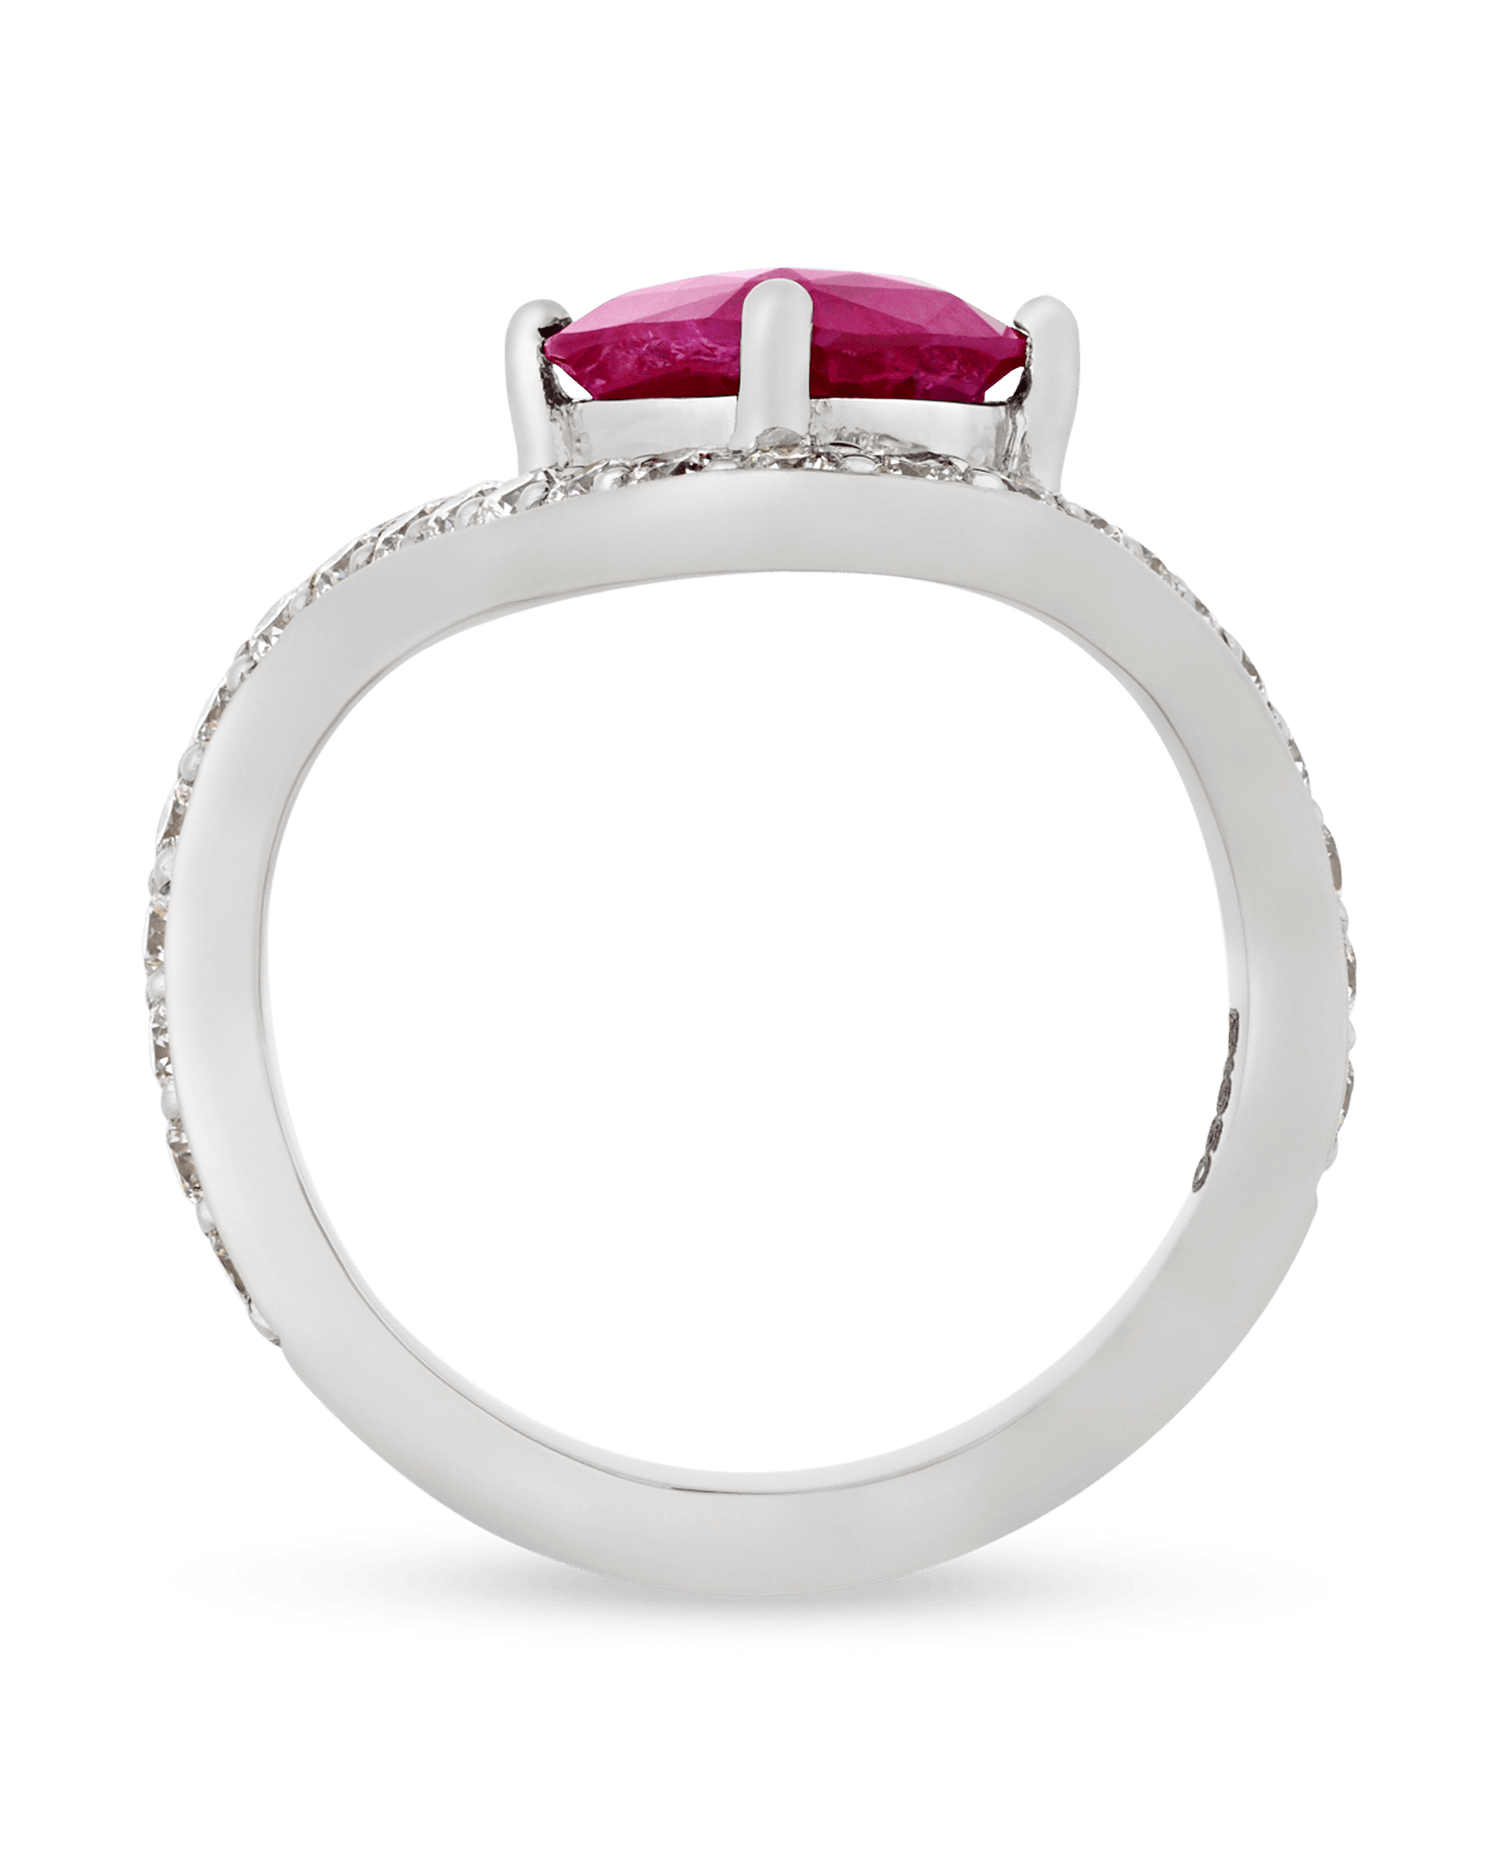 Burma Ruby Ring, 2.39 Carats